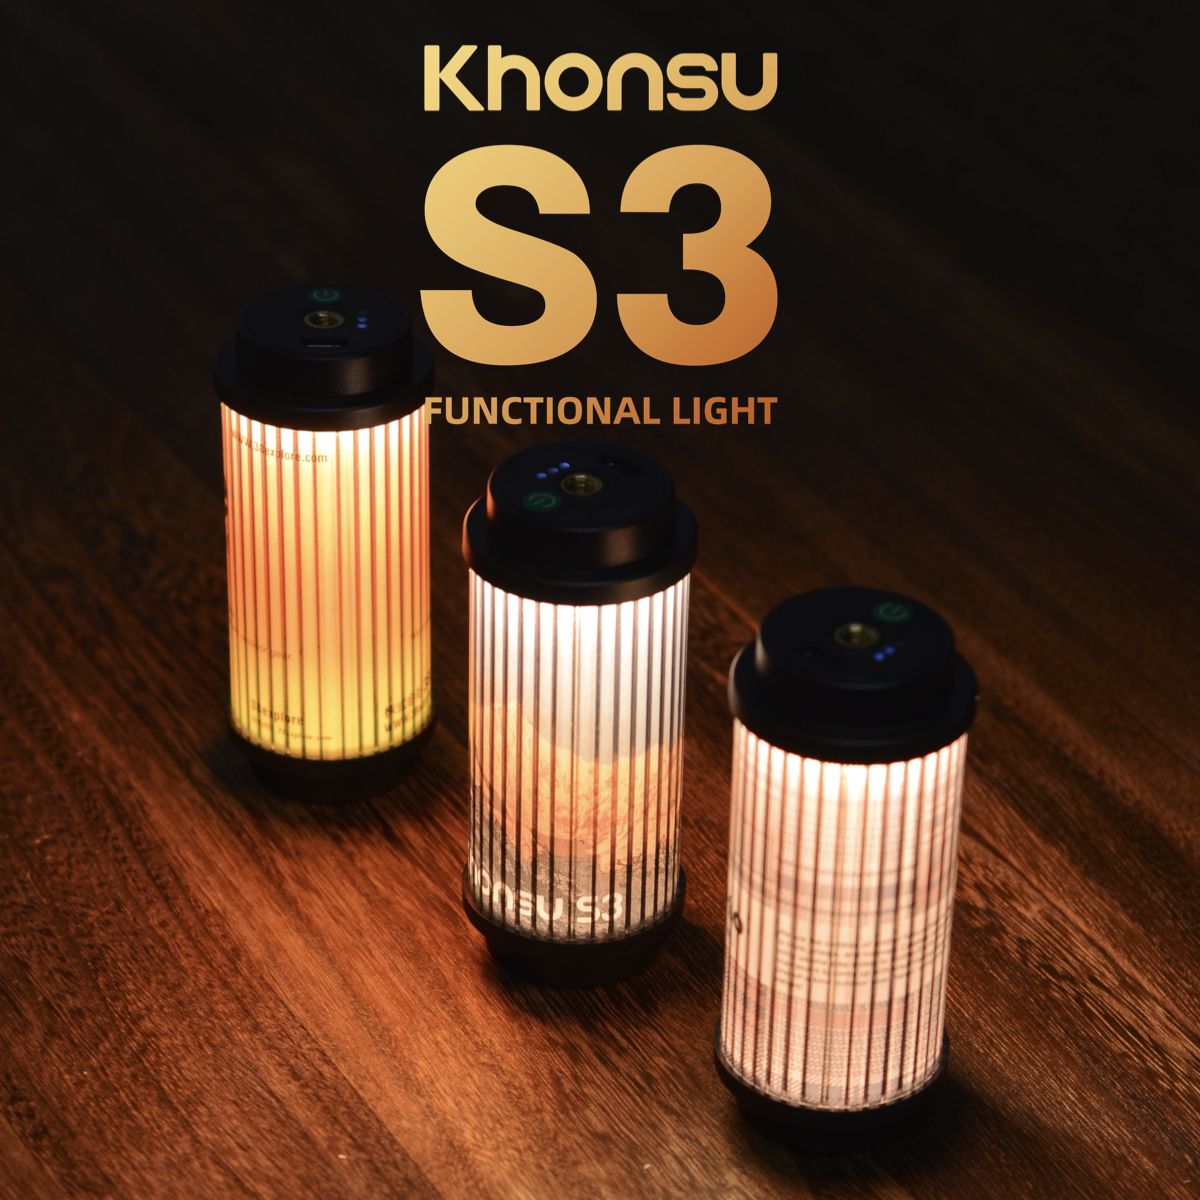 Khonsu S3日照金山露营灯led充电多功能帐篷营地灯